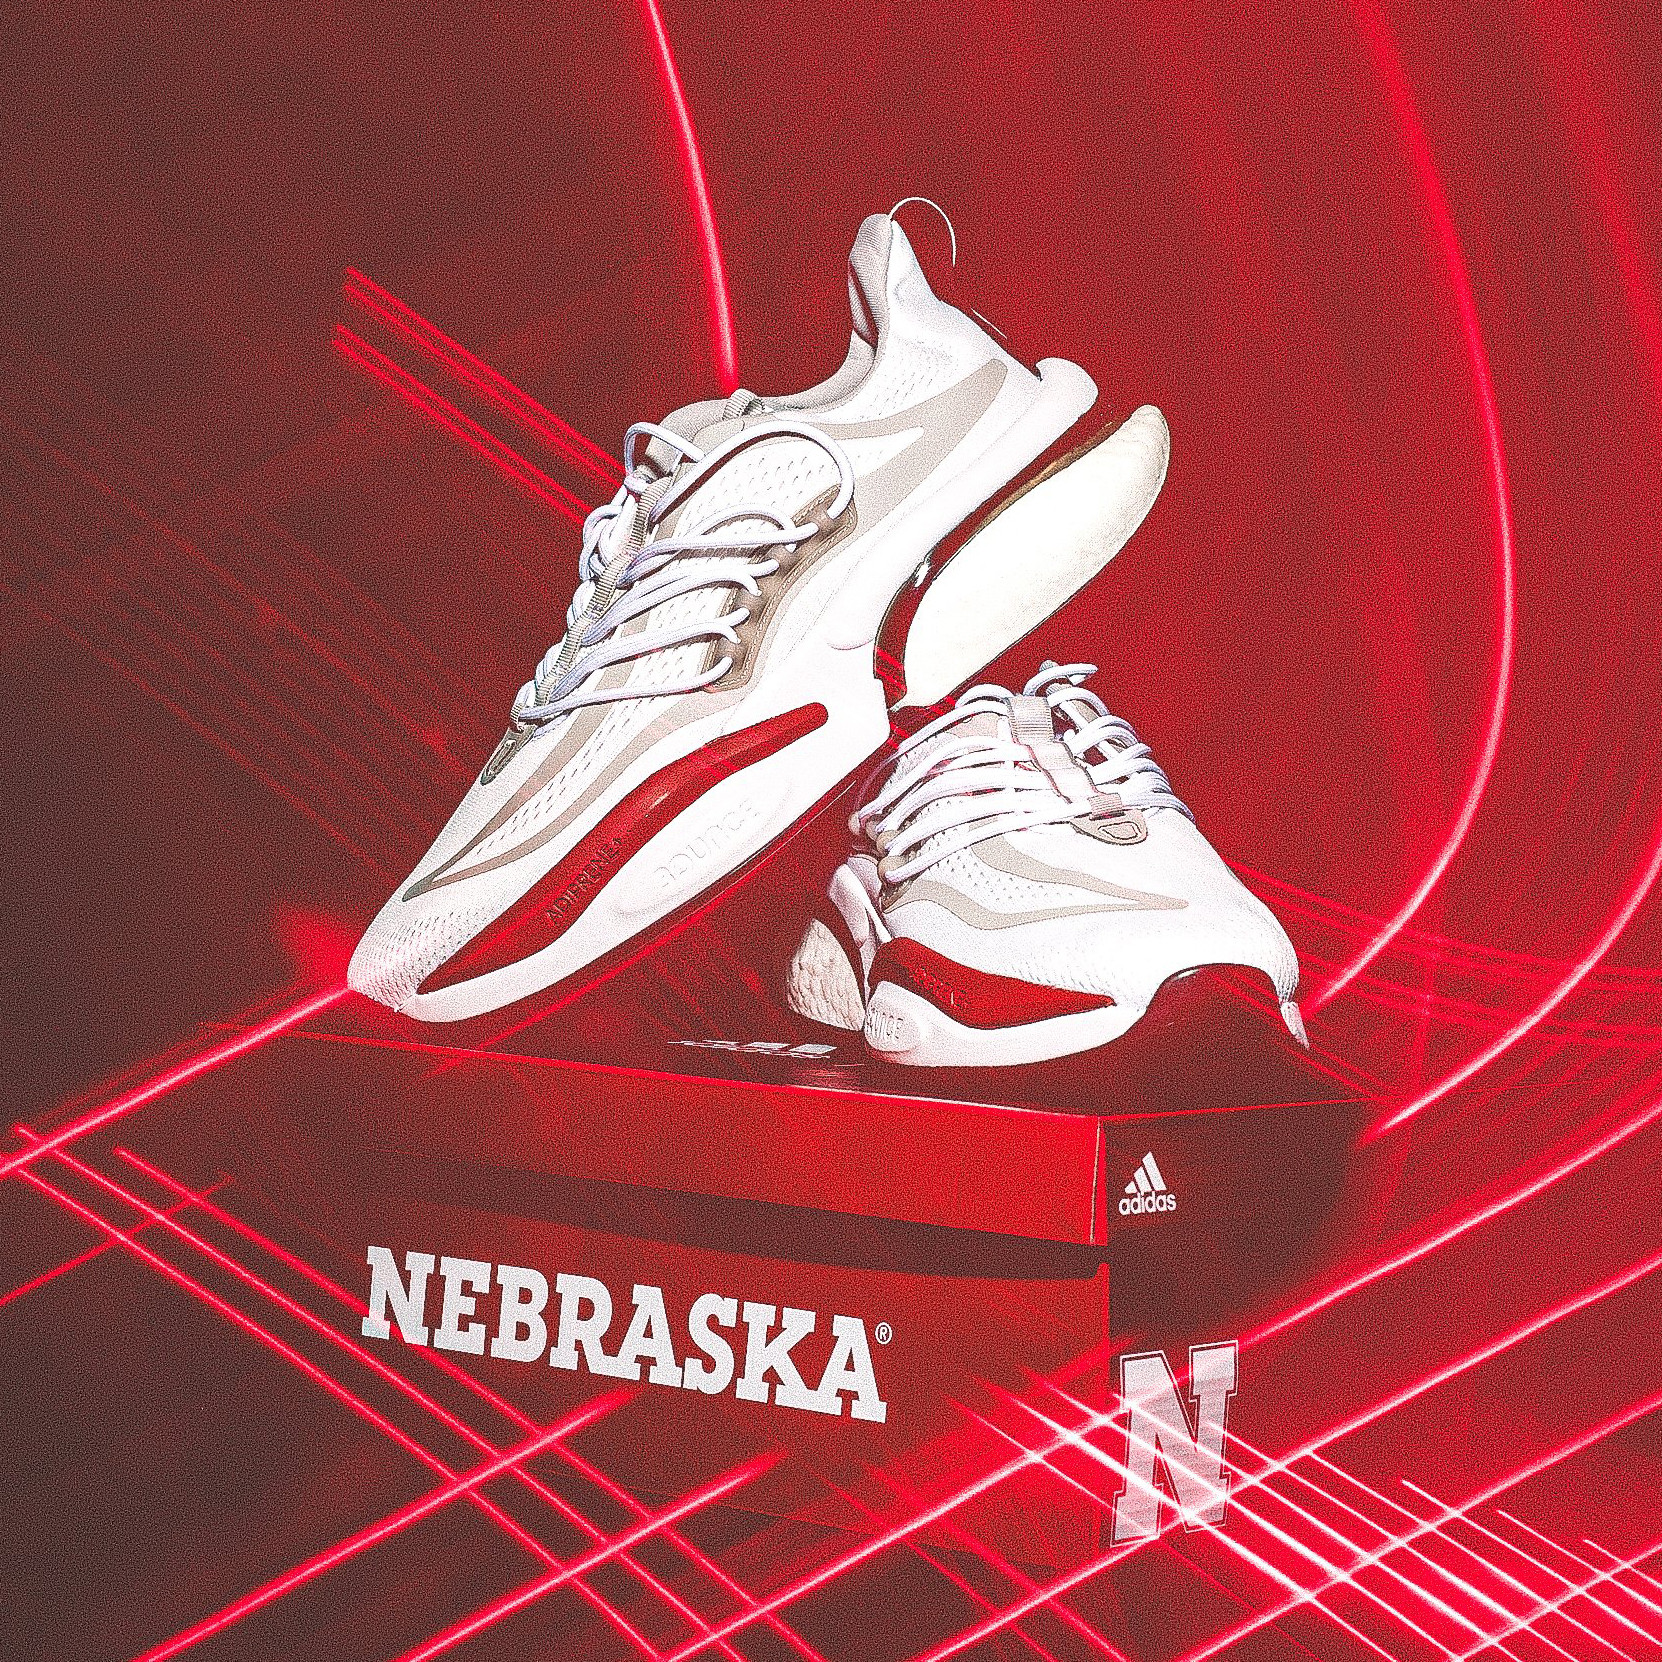 Making a Difference - University of Nebraska - Official Athletics Website